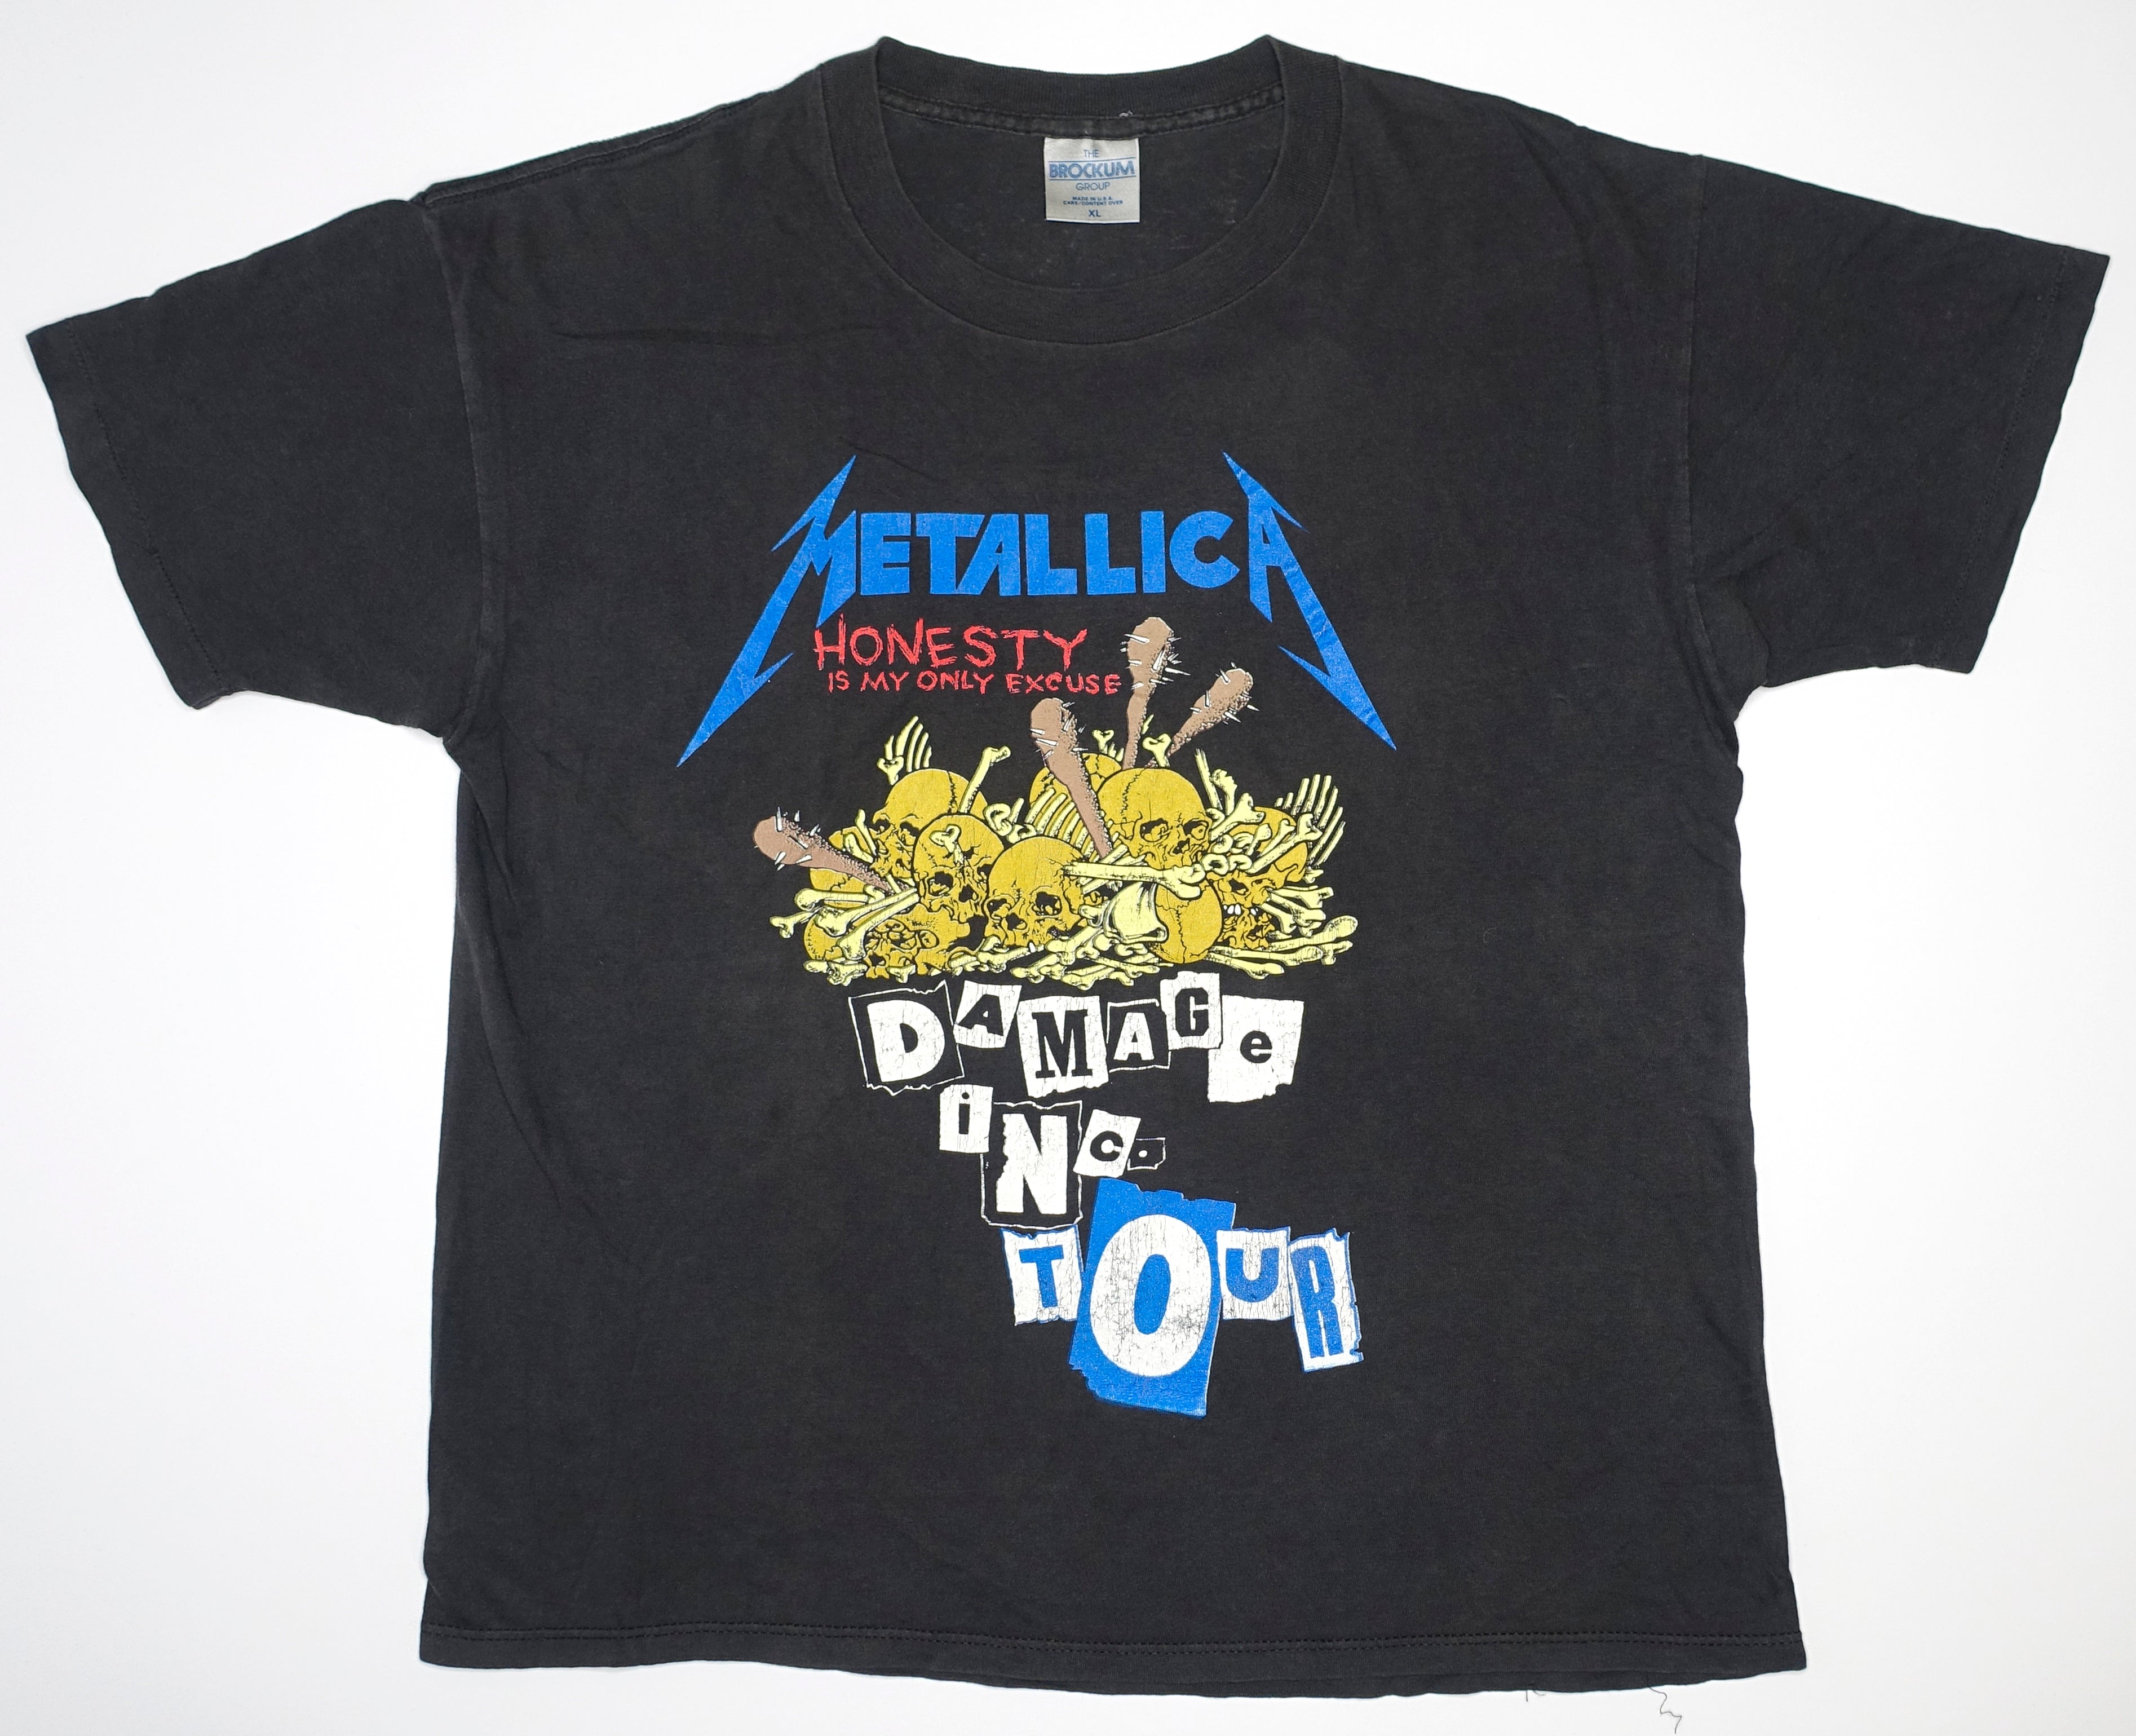 Metallica - Damage Inc. (Reverse Mis-press) 1994 Tour Shirt Size XL (Pushead Design)